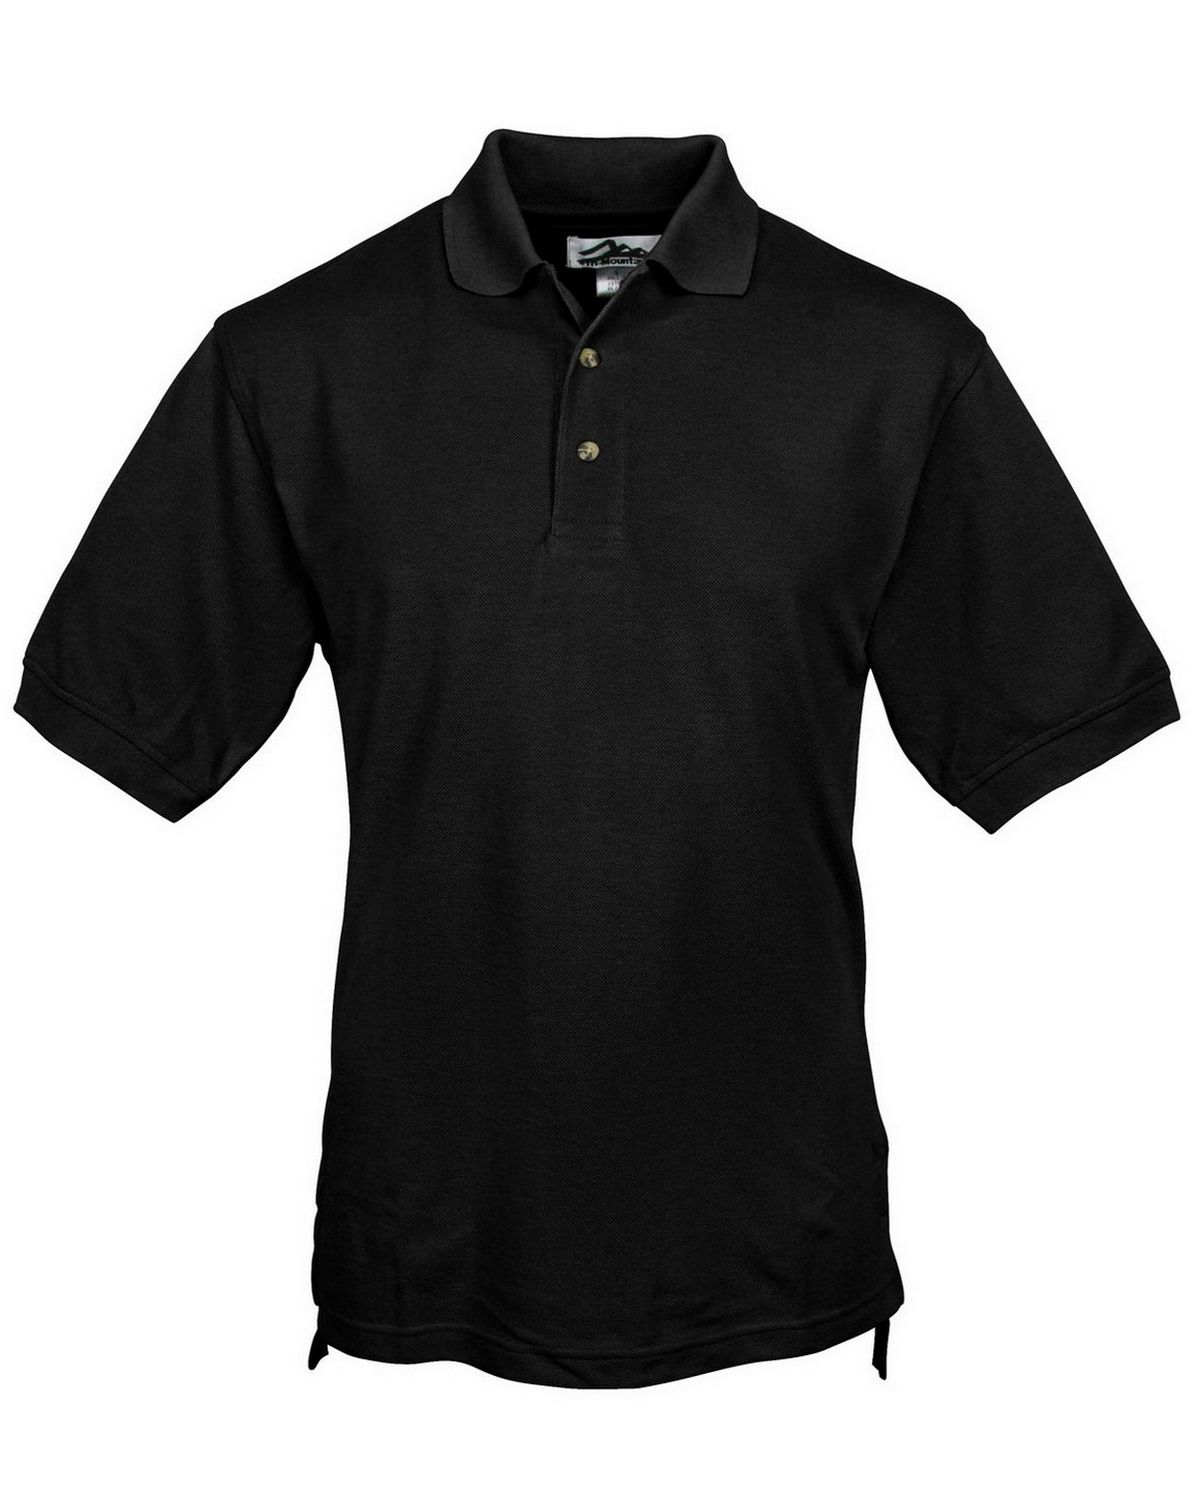 Tri-Mountain 205 Mens stain resistant pique golf shirt